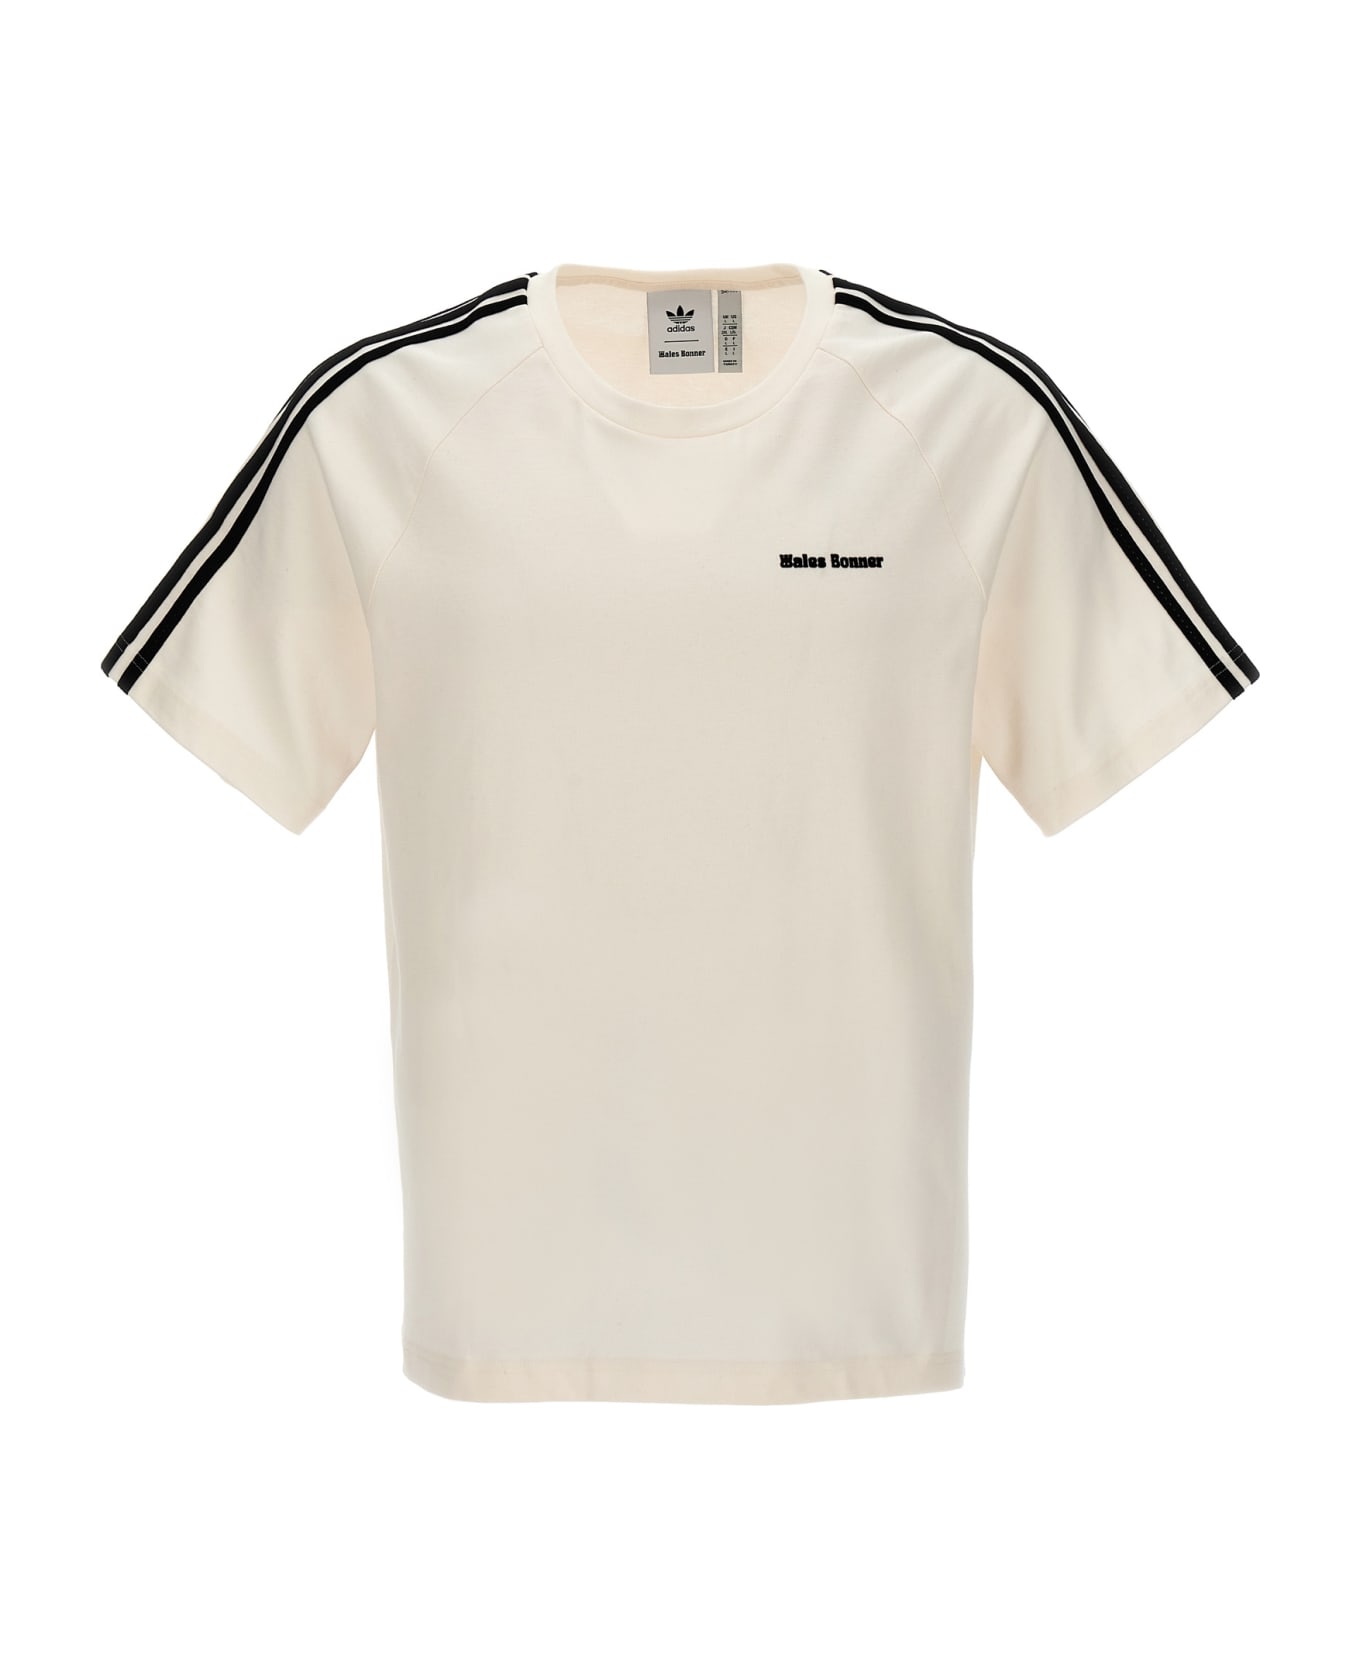 Adidas Originals by Wales Bonner T-shirt X Wales Bonner - Chalk White